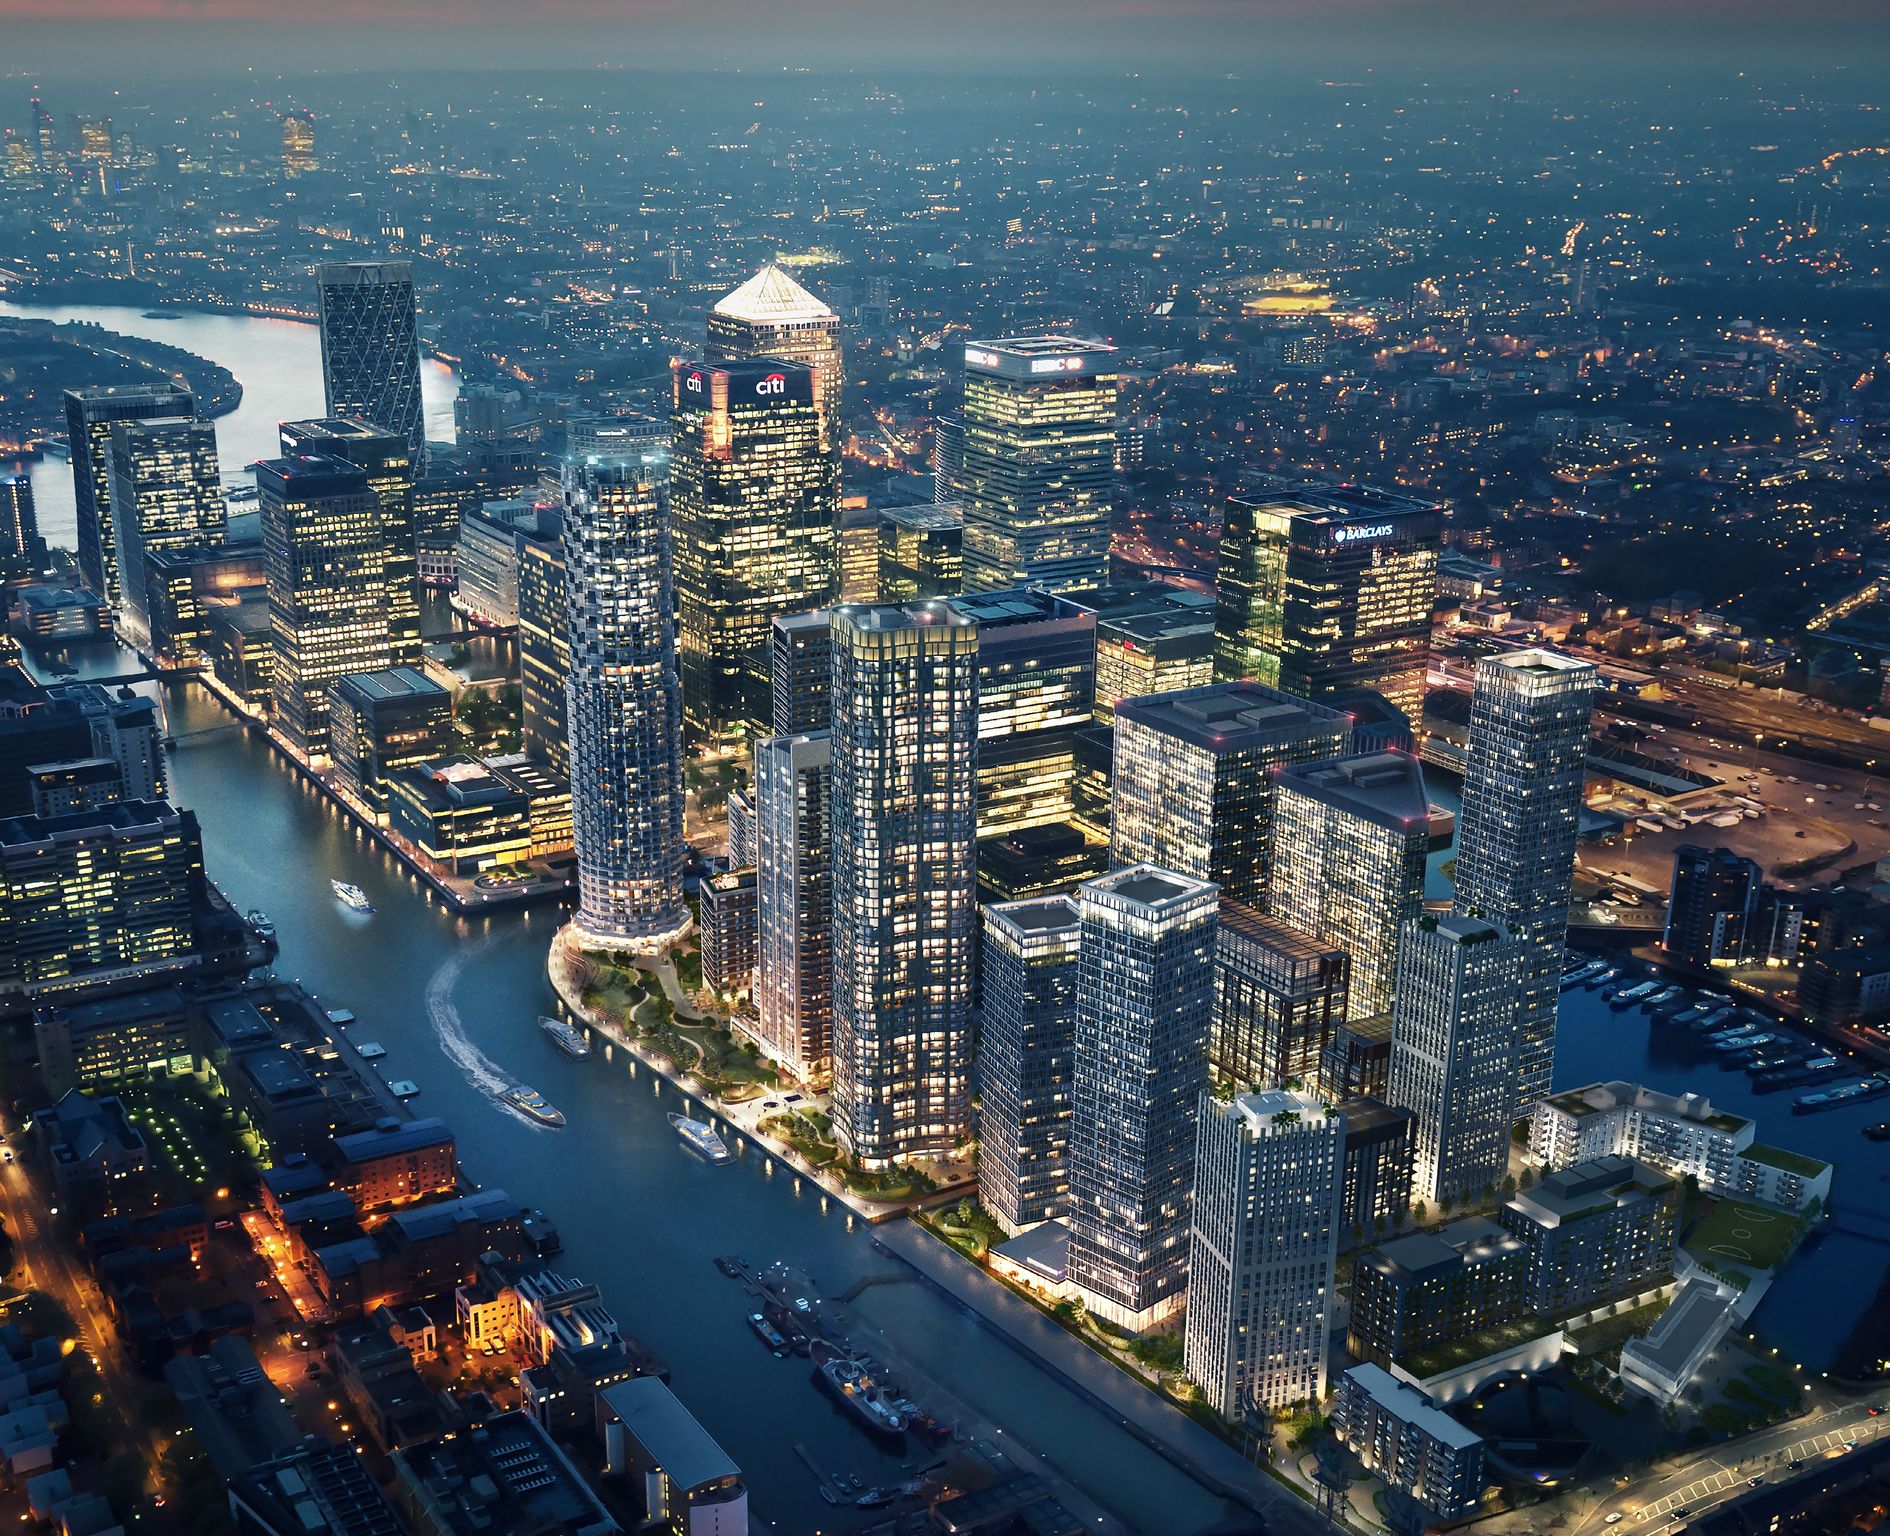 Canary Wharf's District - New London Development